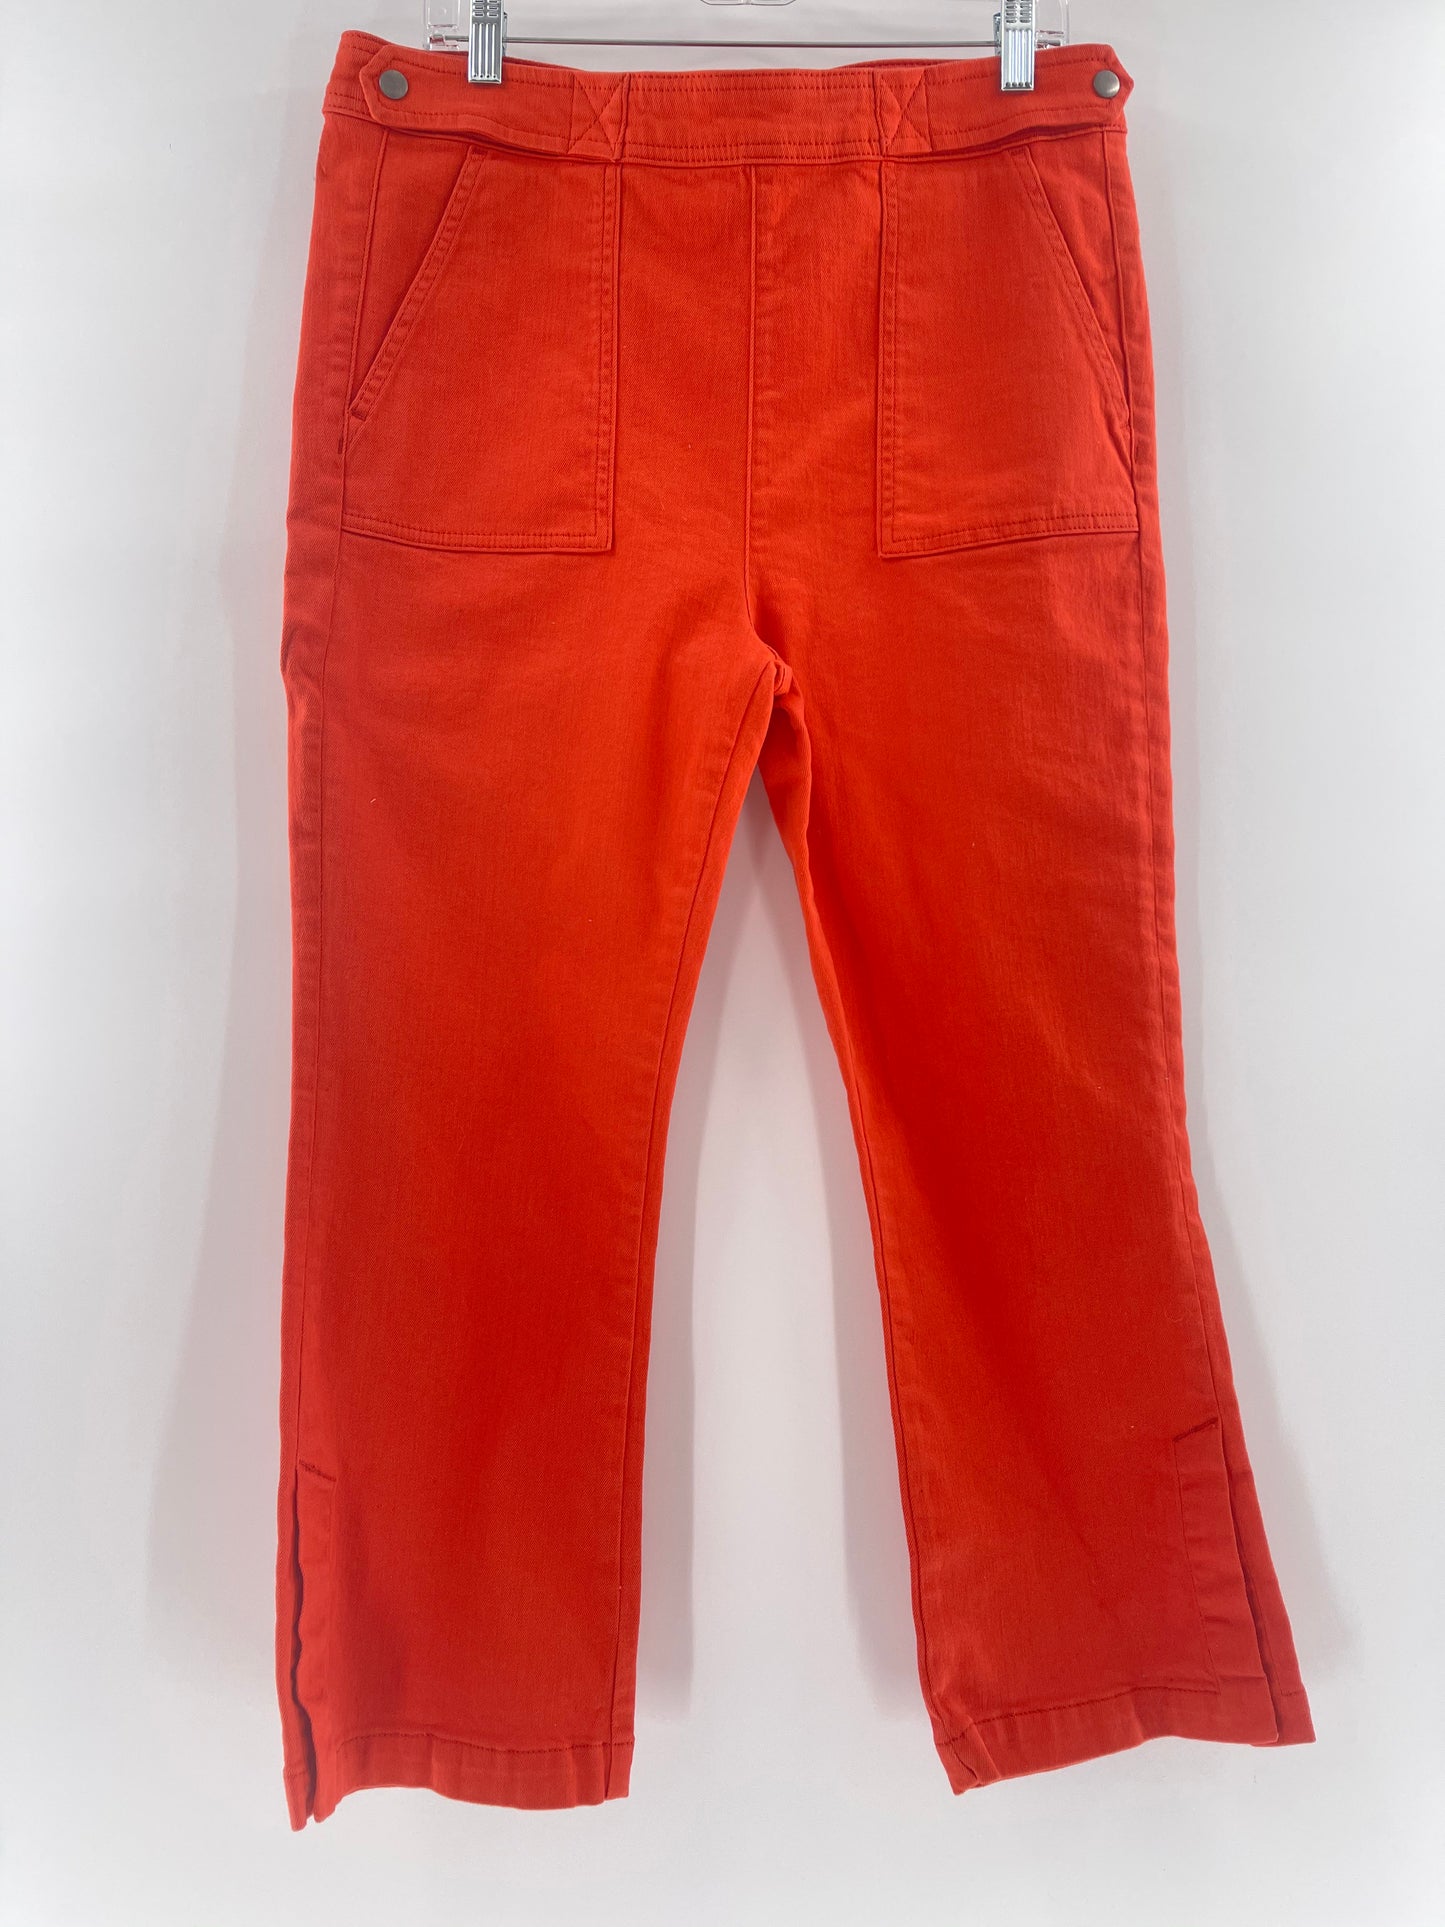 BDG Orange Jeans (Size W 31)